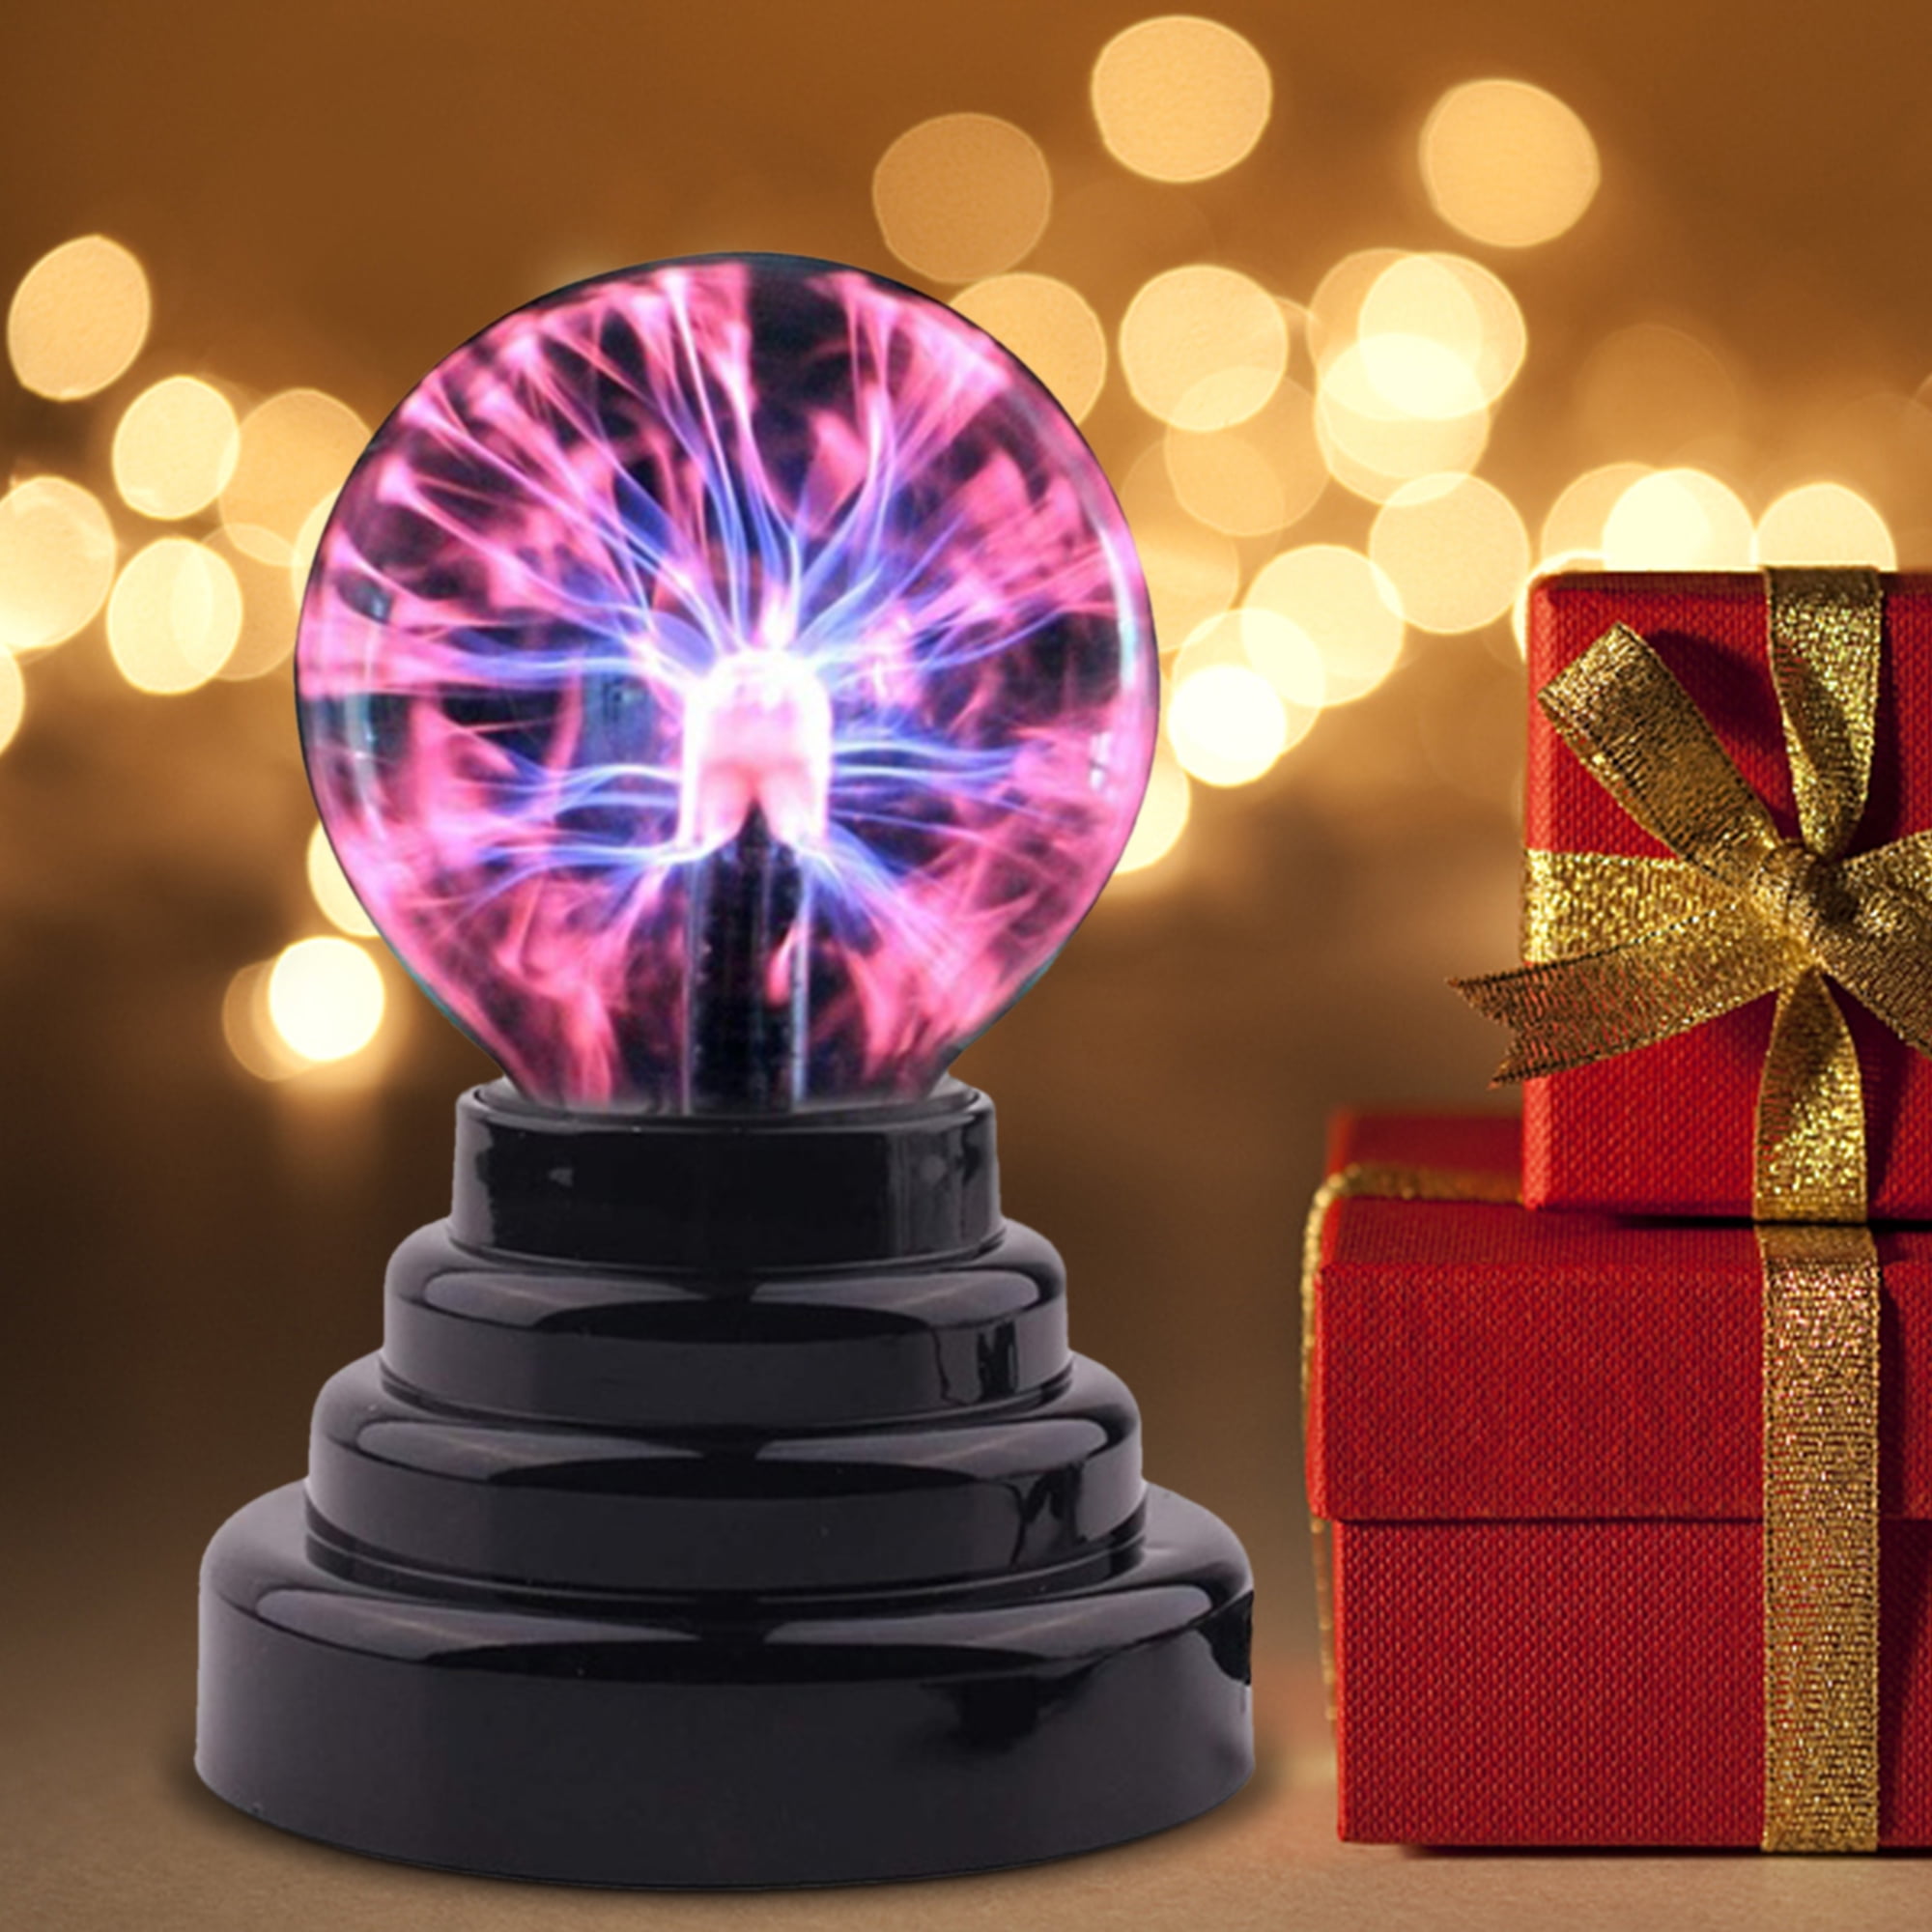 Plasma Ball Lamp Touch Sensitive Novelty Nebula Sphere Globe Magical Orb  Toy Gift for Kids Men & Women for Birthday Christmas Party Celebrations 